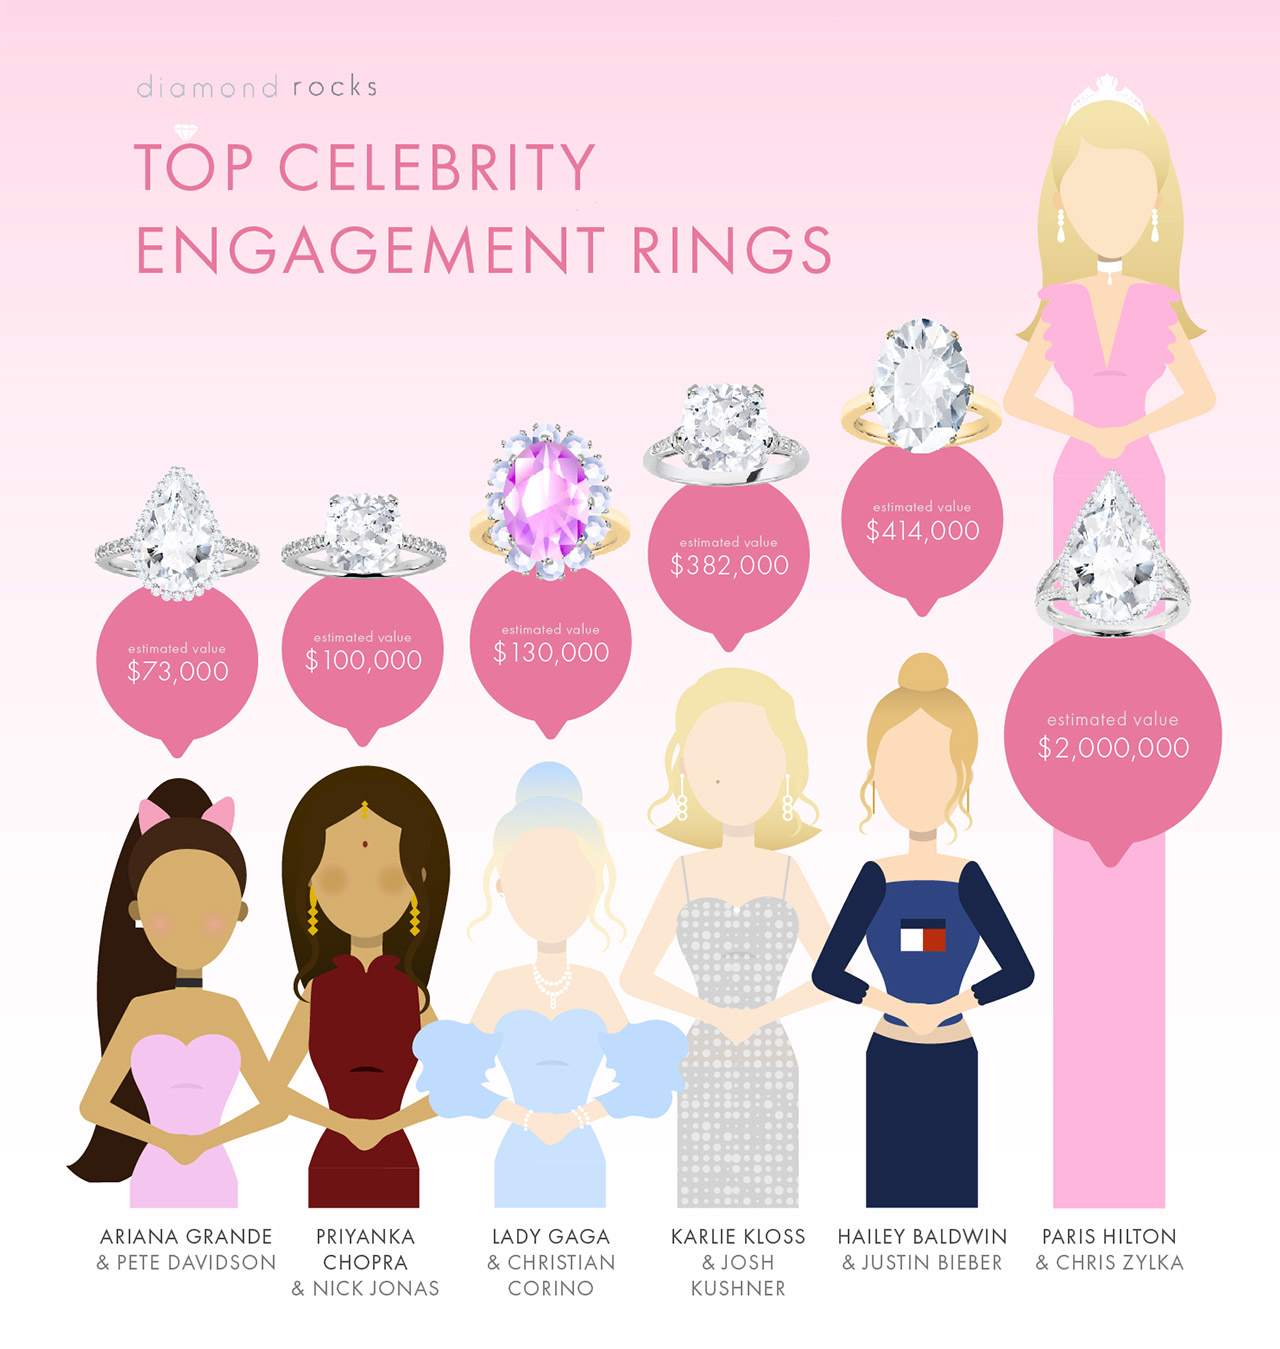 Best celebrity engagement rings from Hailey Baldwin Lady Gaga Priyanka Chopra Ariana Grande and Paris Hilton